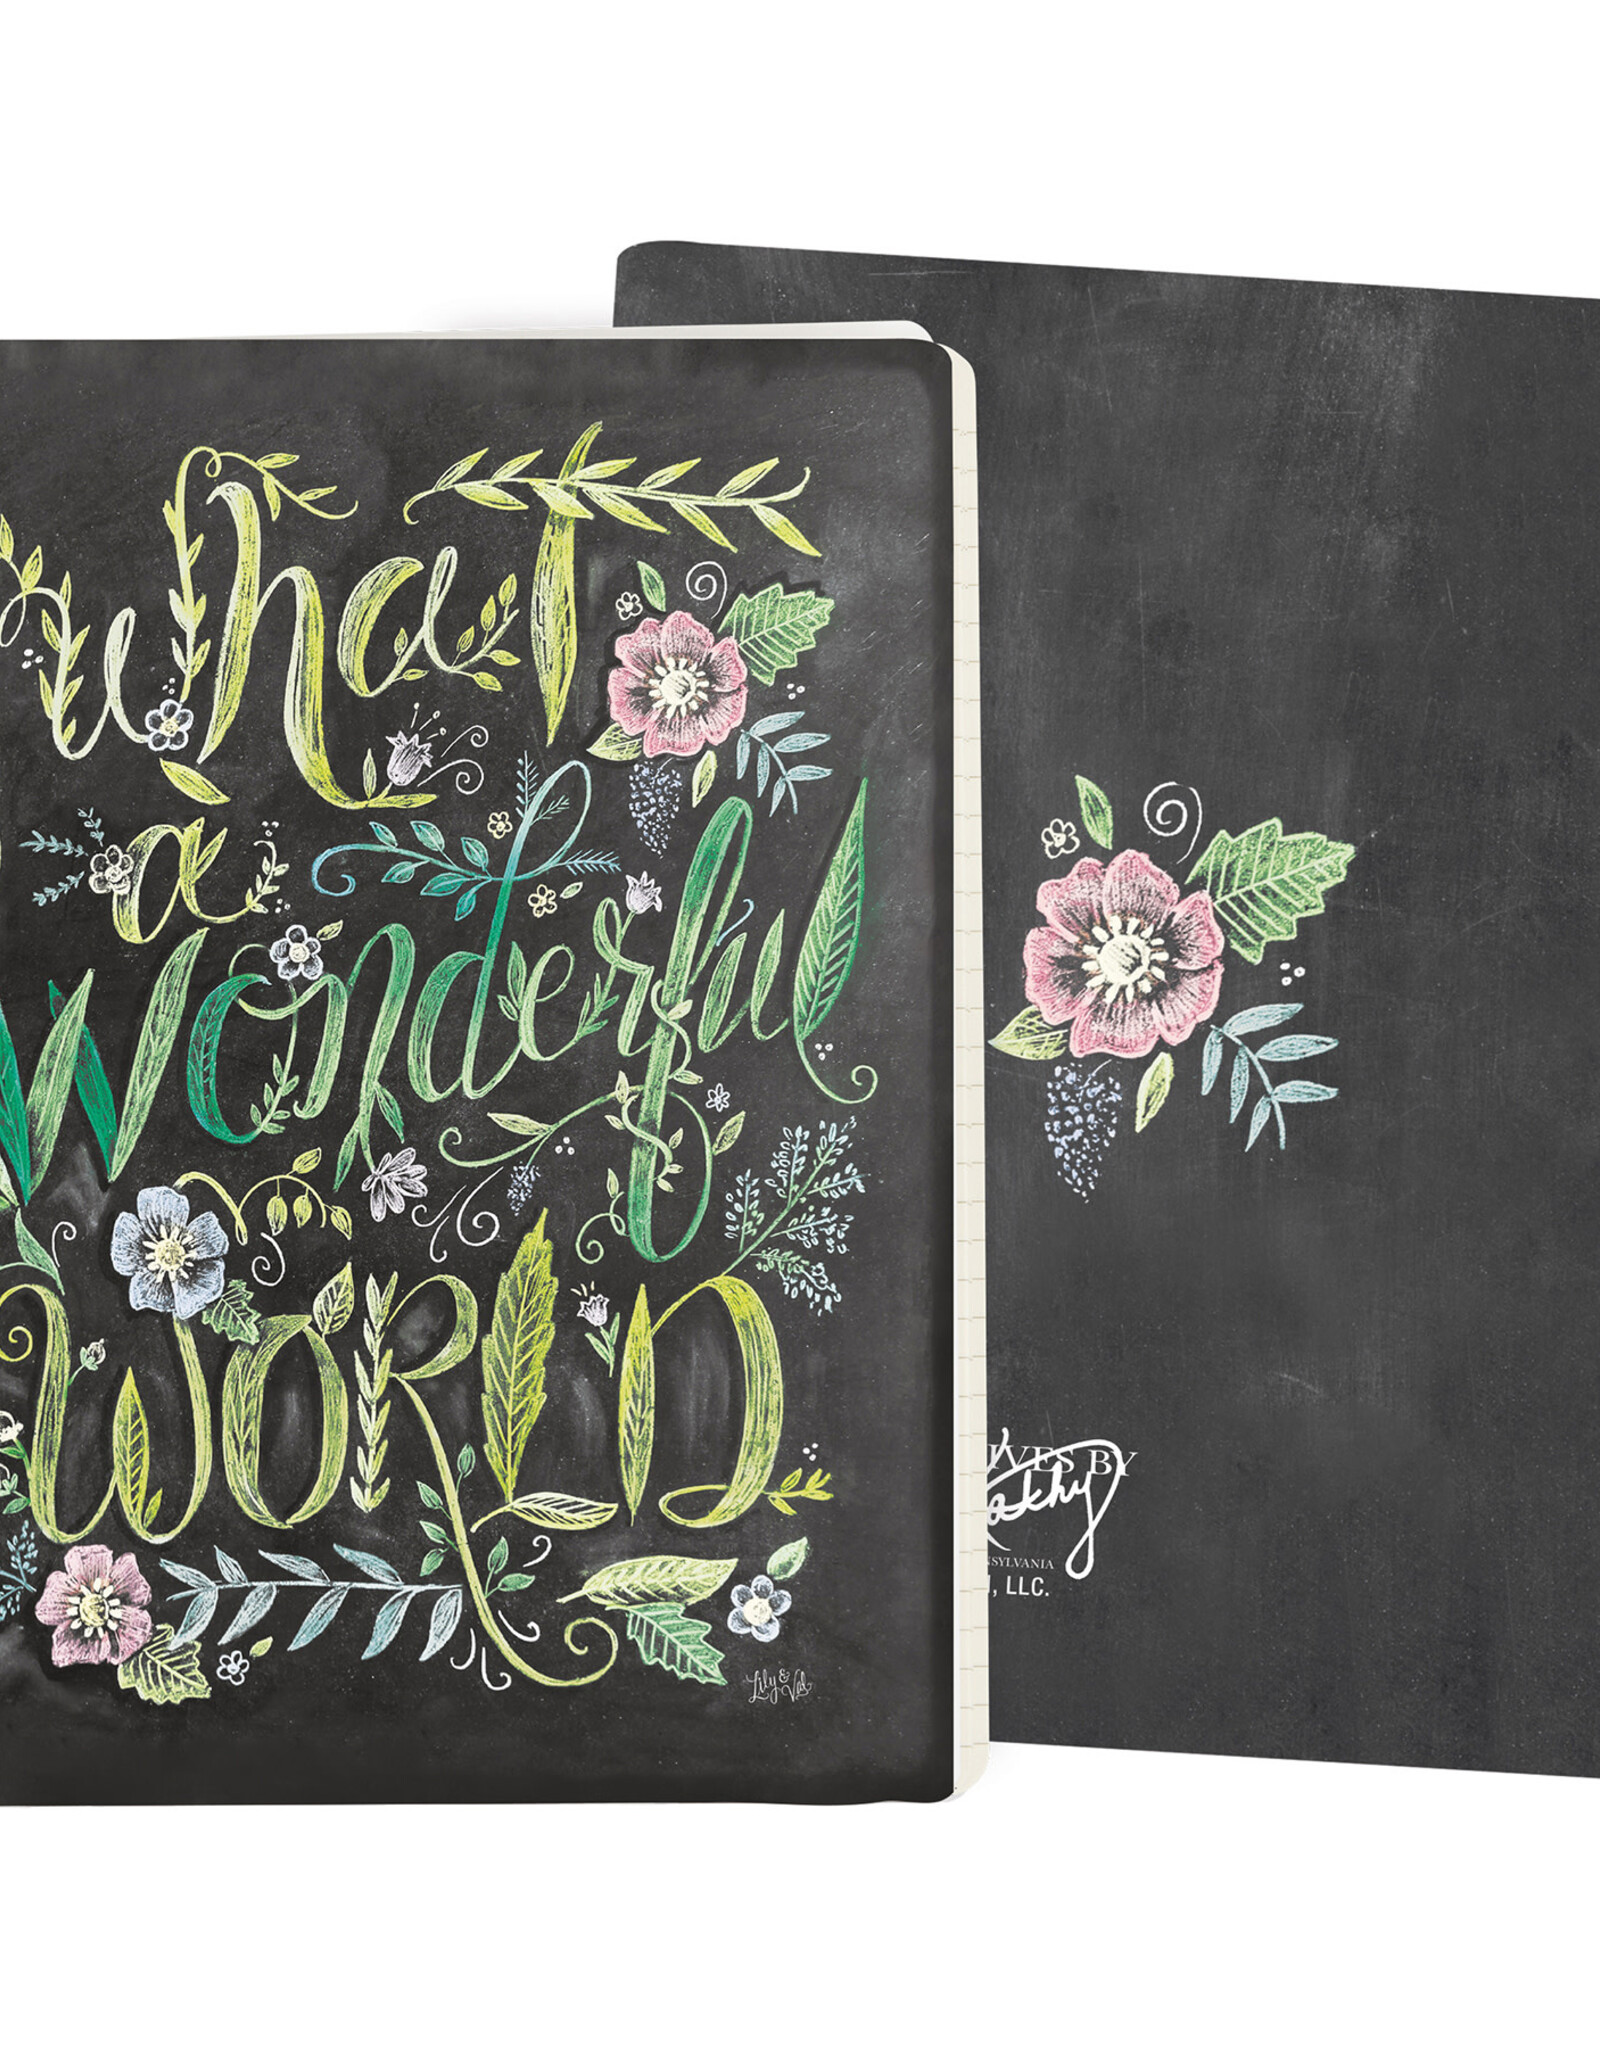 What A Wonderful World Spiral Notebook